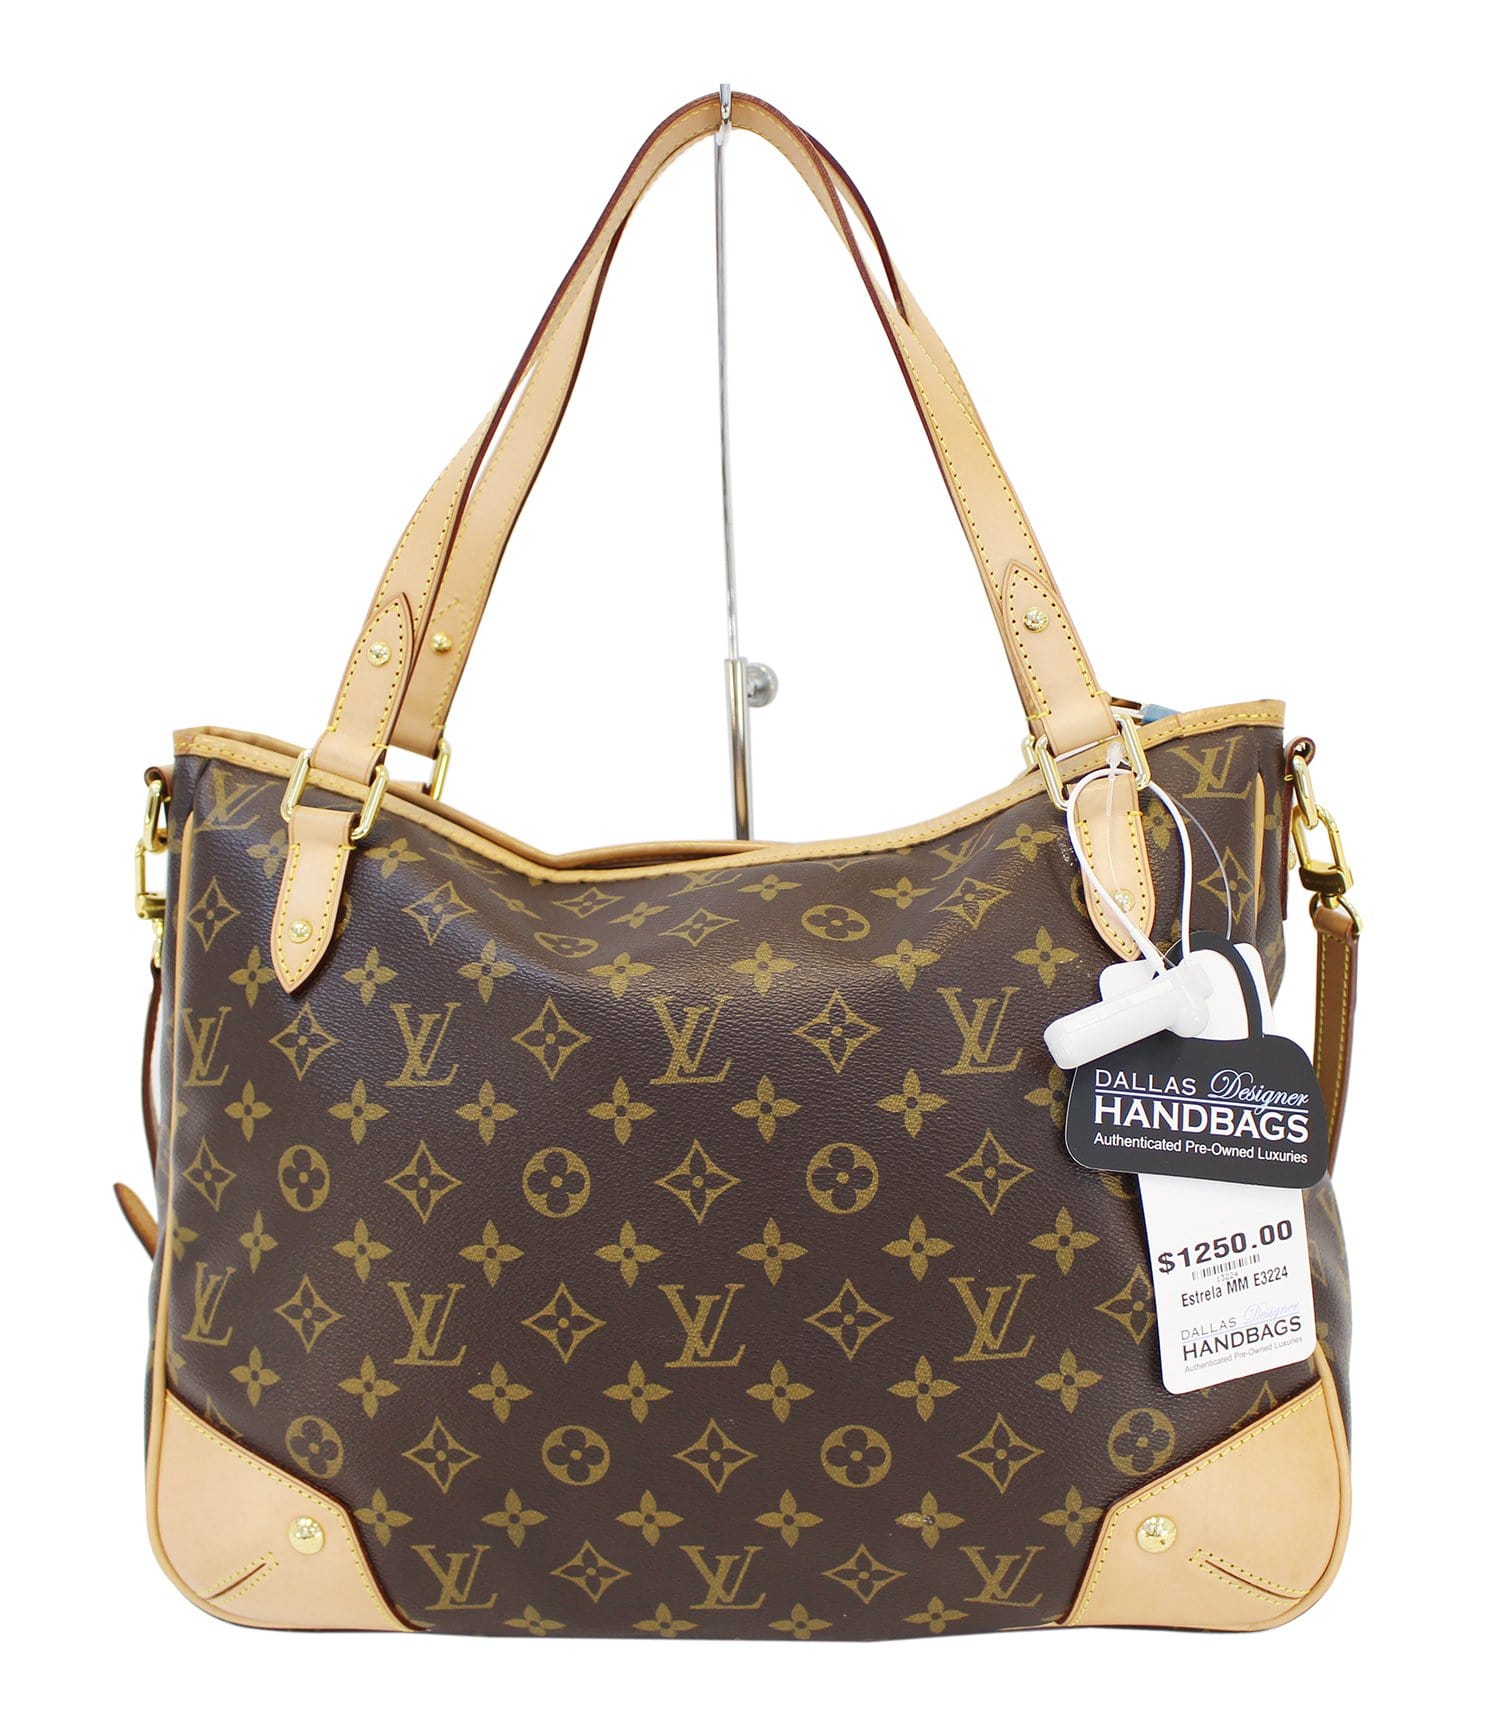 Louis Vuitton shoulder bag Estrela MM monogram